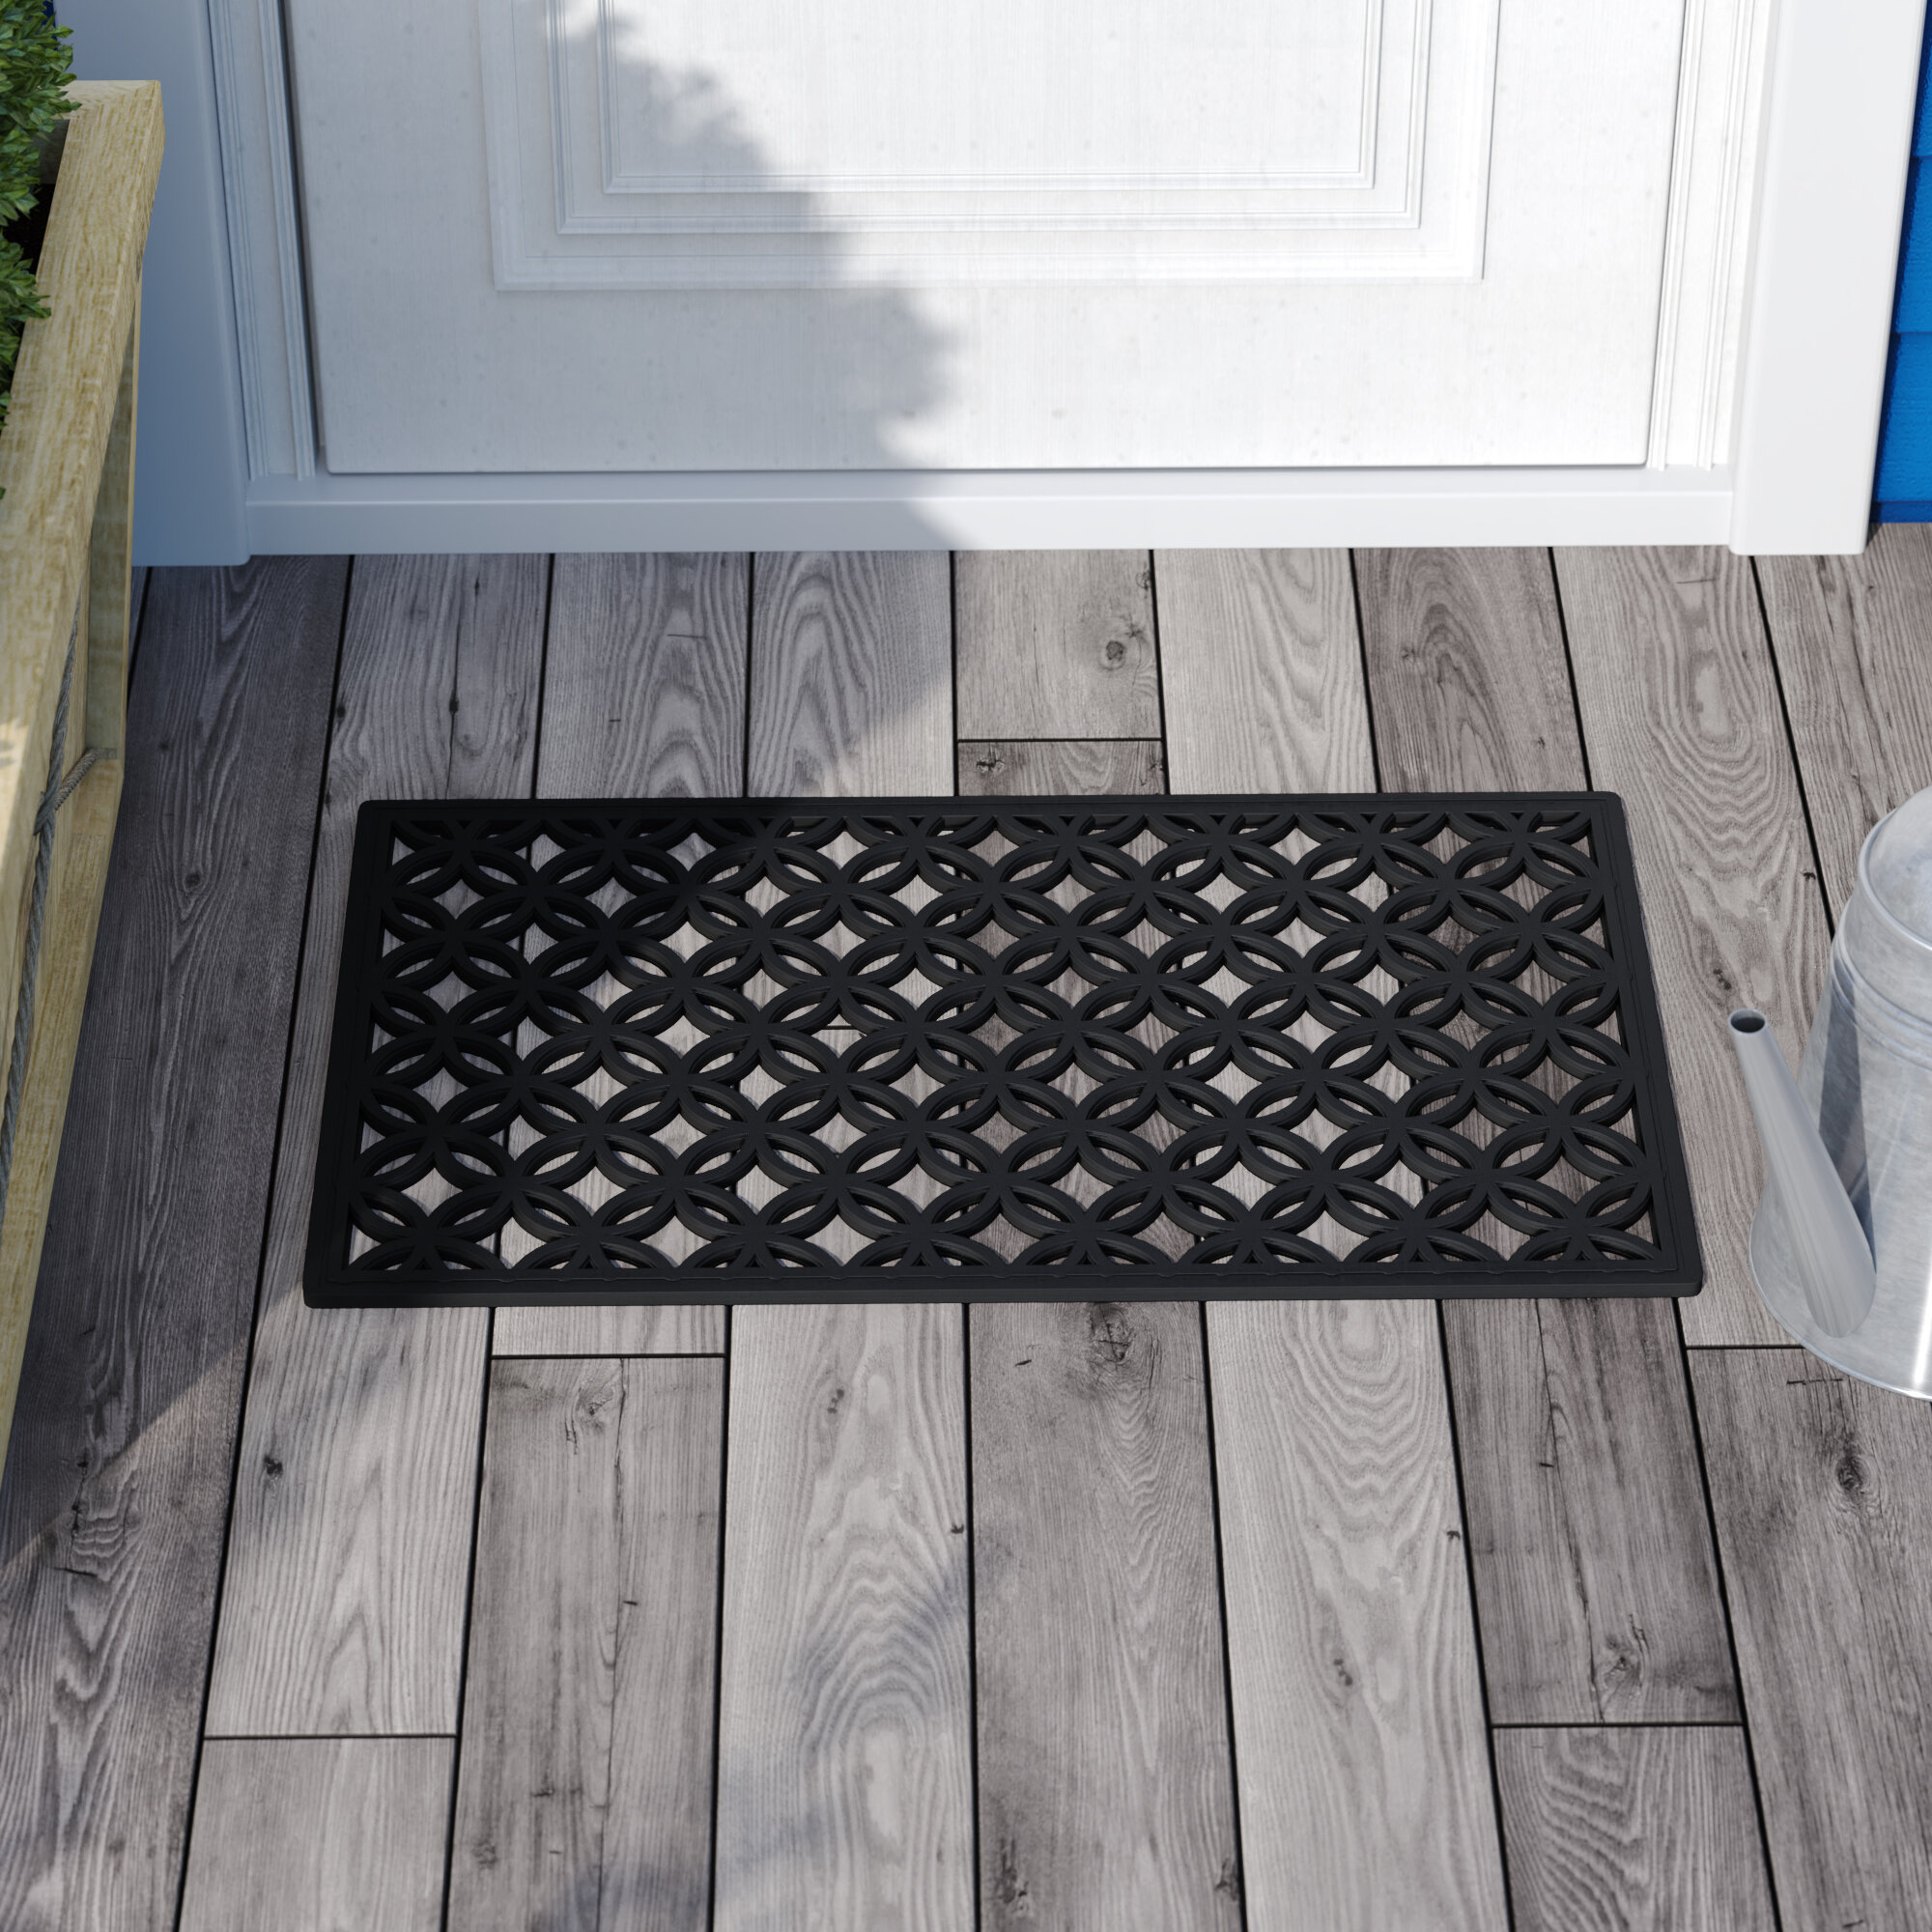 Lark Manor Altarik Non-Slip Geometric Outdoor Doormat & Reviews